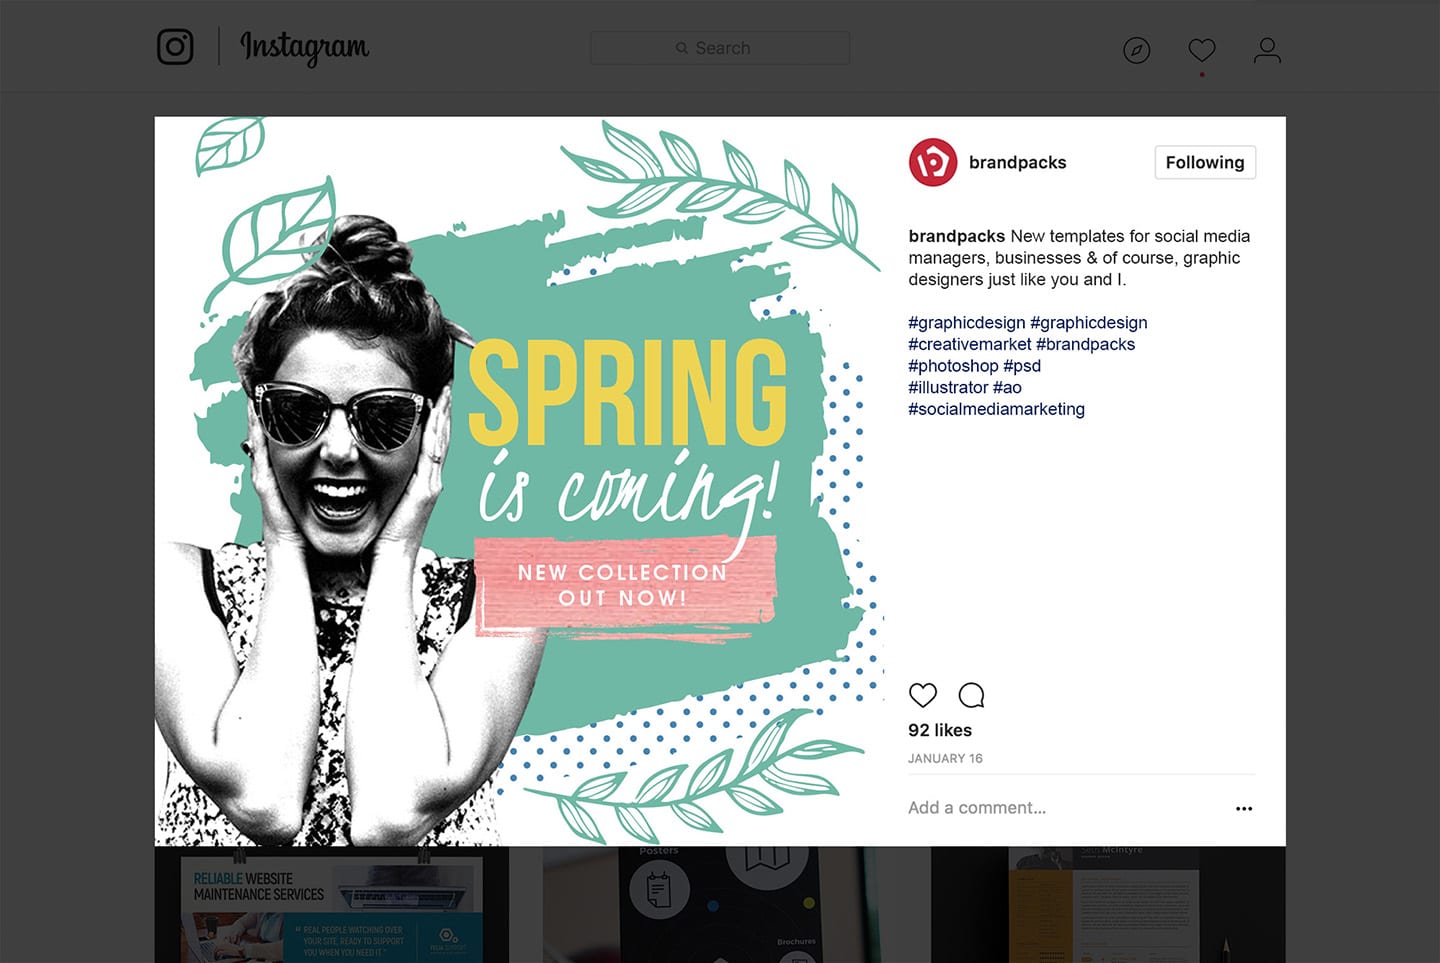 Spring Sale Instagram Template